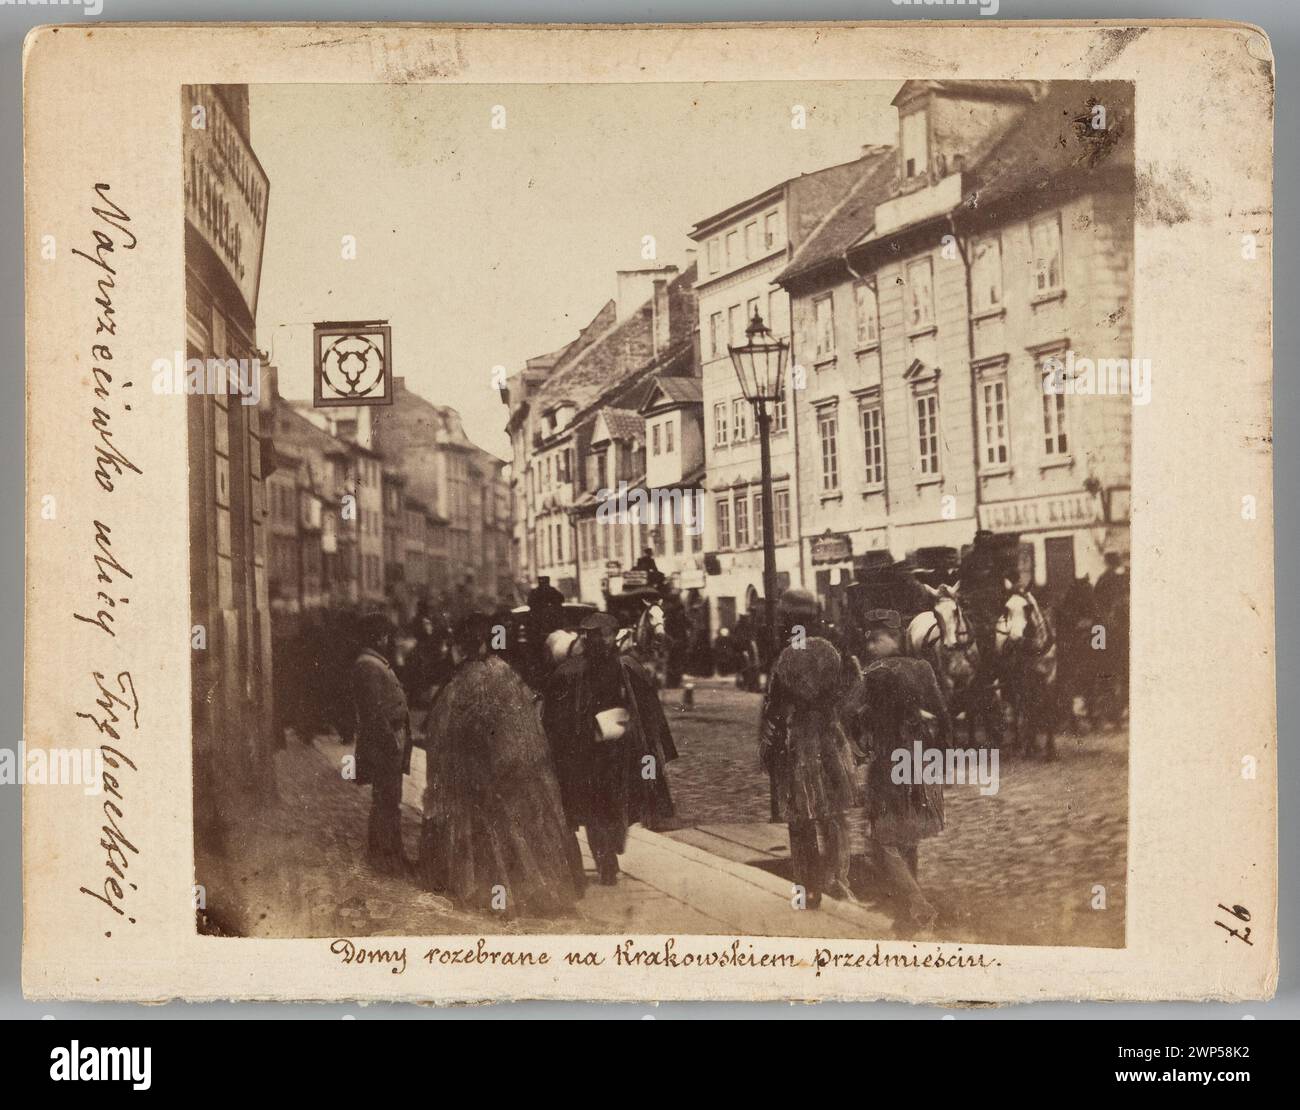 Varsavia. Case demolite nei sobborghi di Cracovia. (Veduta dei sobborghi 'Wrkie' di Krakowskie verso Plac Zamkowy, la cui facciata orientale visibile sulla destra fu demolita nel 1865); Beyer, Karol (1818-1877); 1861-1863 (1861-00-00-1863-00-00-00); Krakowskie Przedmieście (Varsavia - via), Méyet, Leopold (1850-1912 Foto Stock